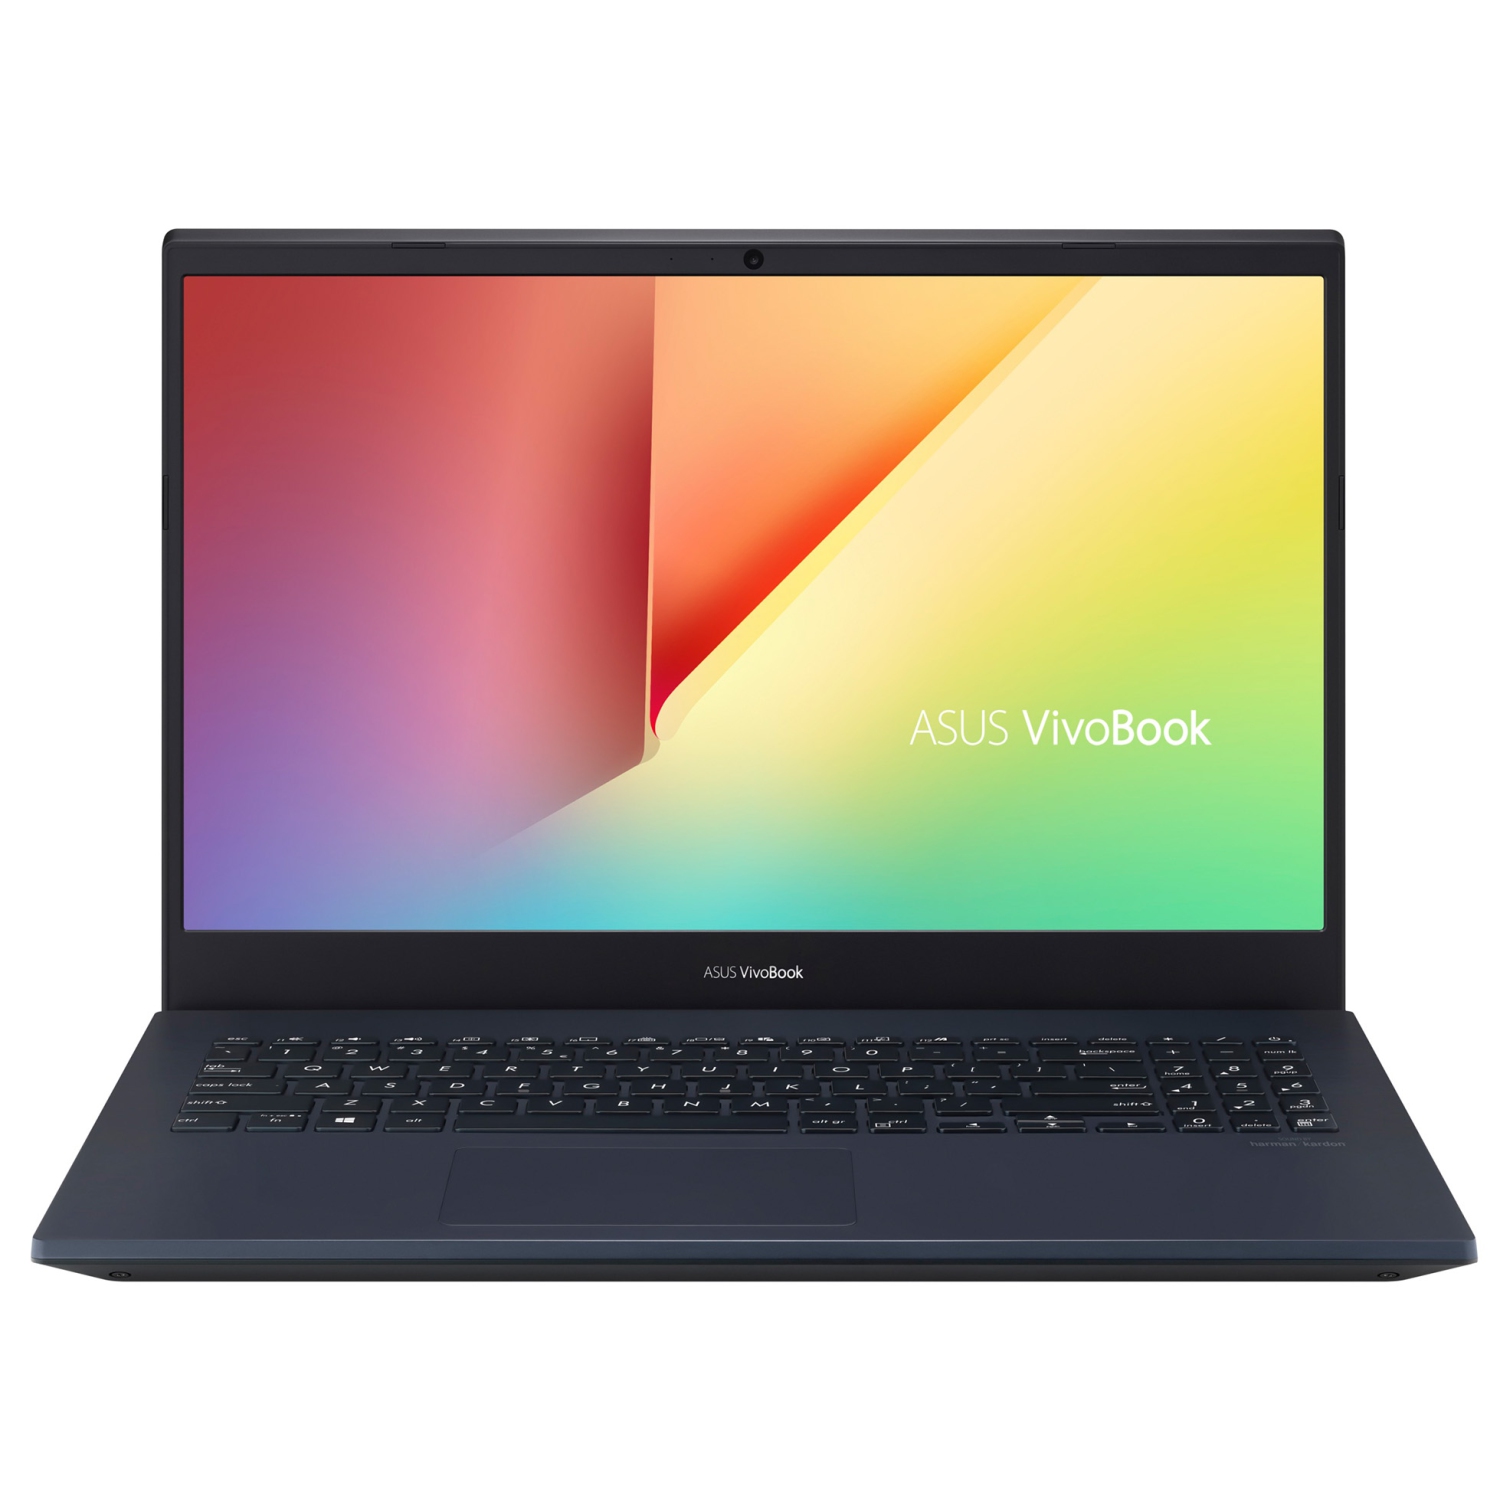 Custom ASUS VivoBook Laptop (Intel i5-10300H, 36GB RAM, 2TB PCIe SSD, NVIDIA GTX 1650, 15.6" Full HD (1920x1080), Win 10 Pro)